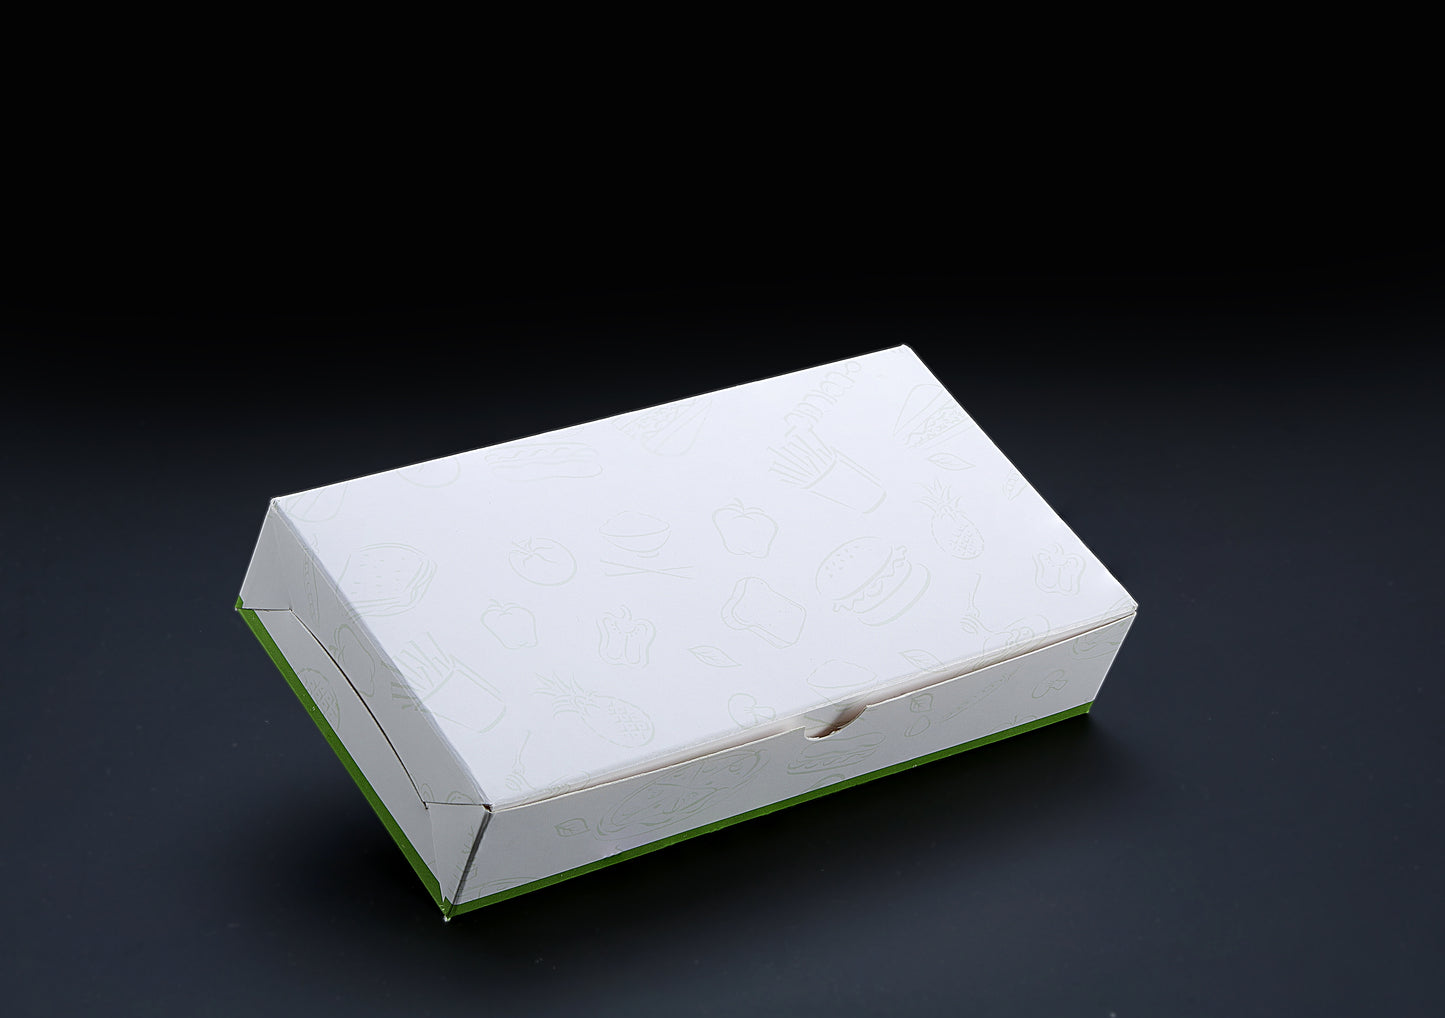 Multi Purpose Food Box - RB26 (100x Pack)